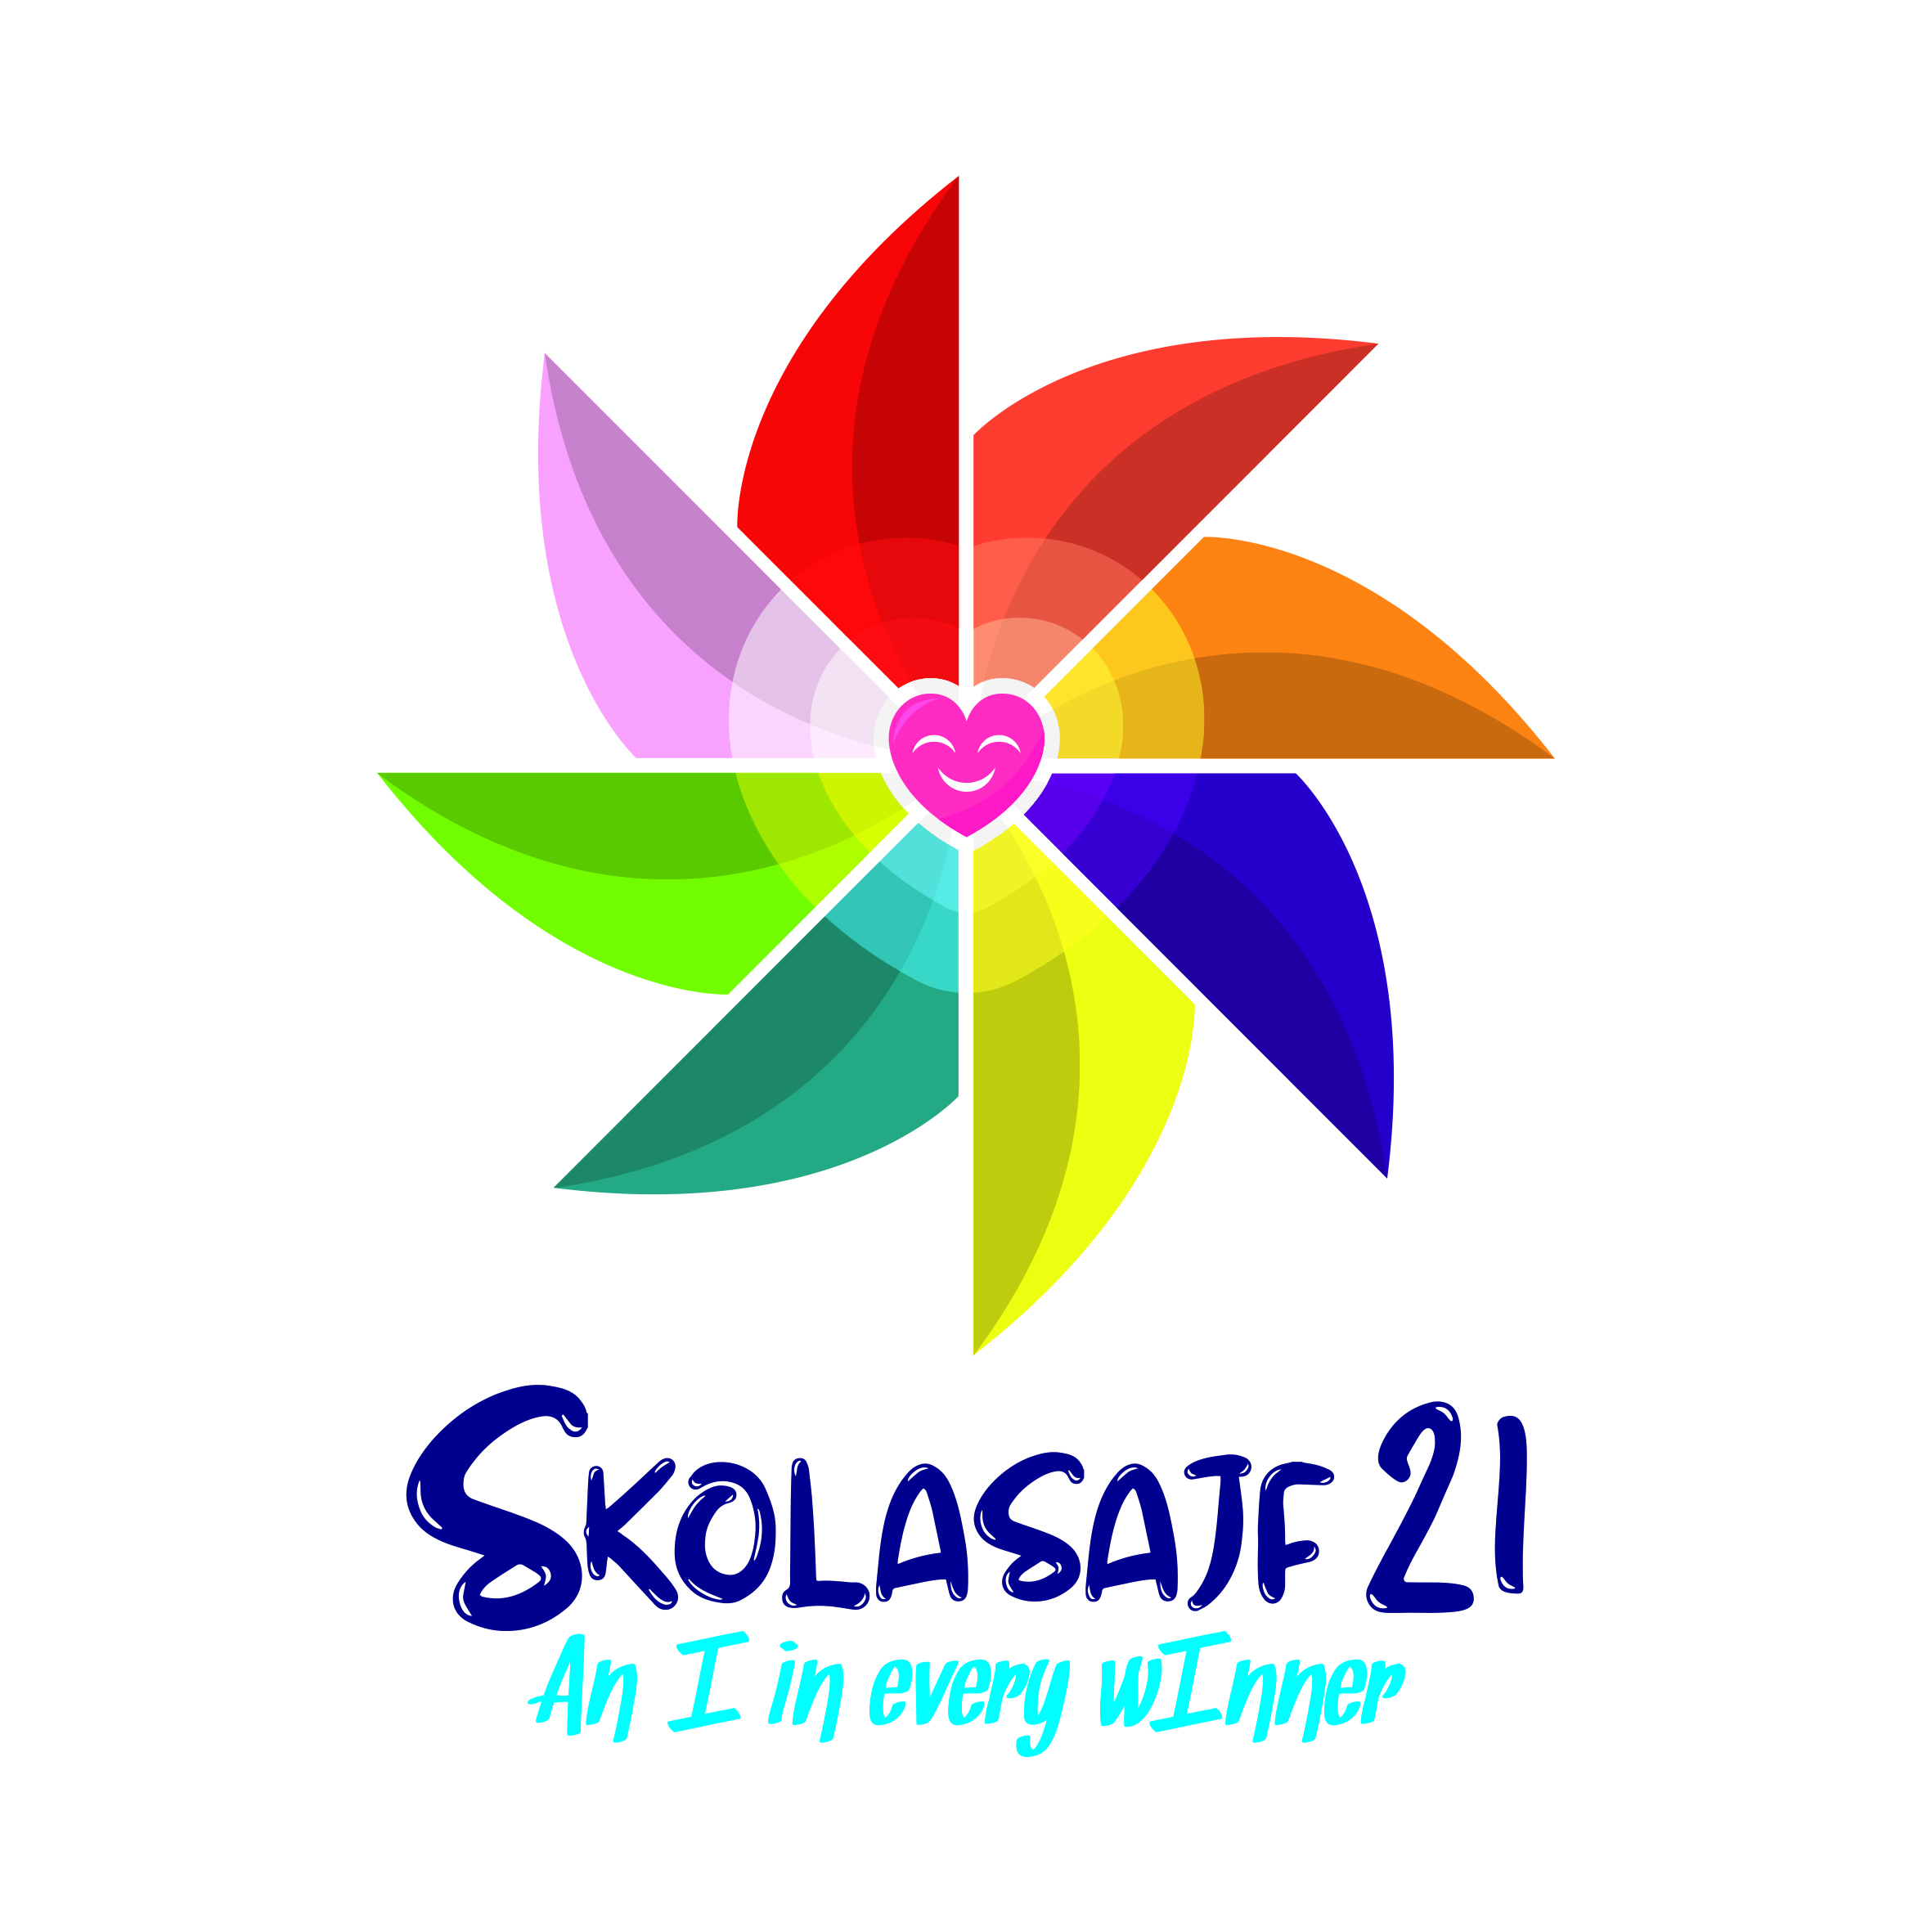 SkolaSajf 2021 Applications now open